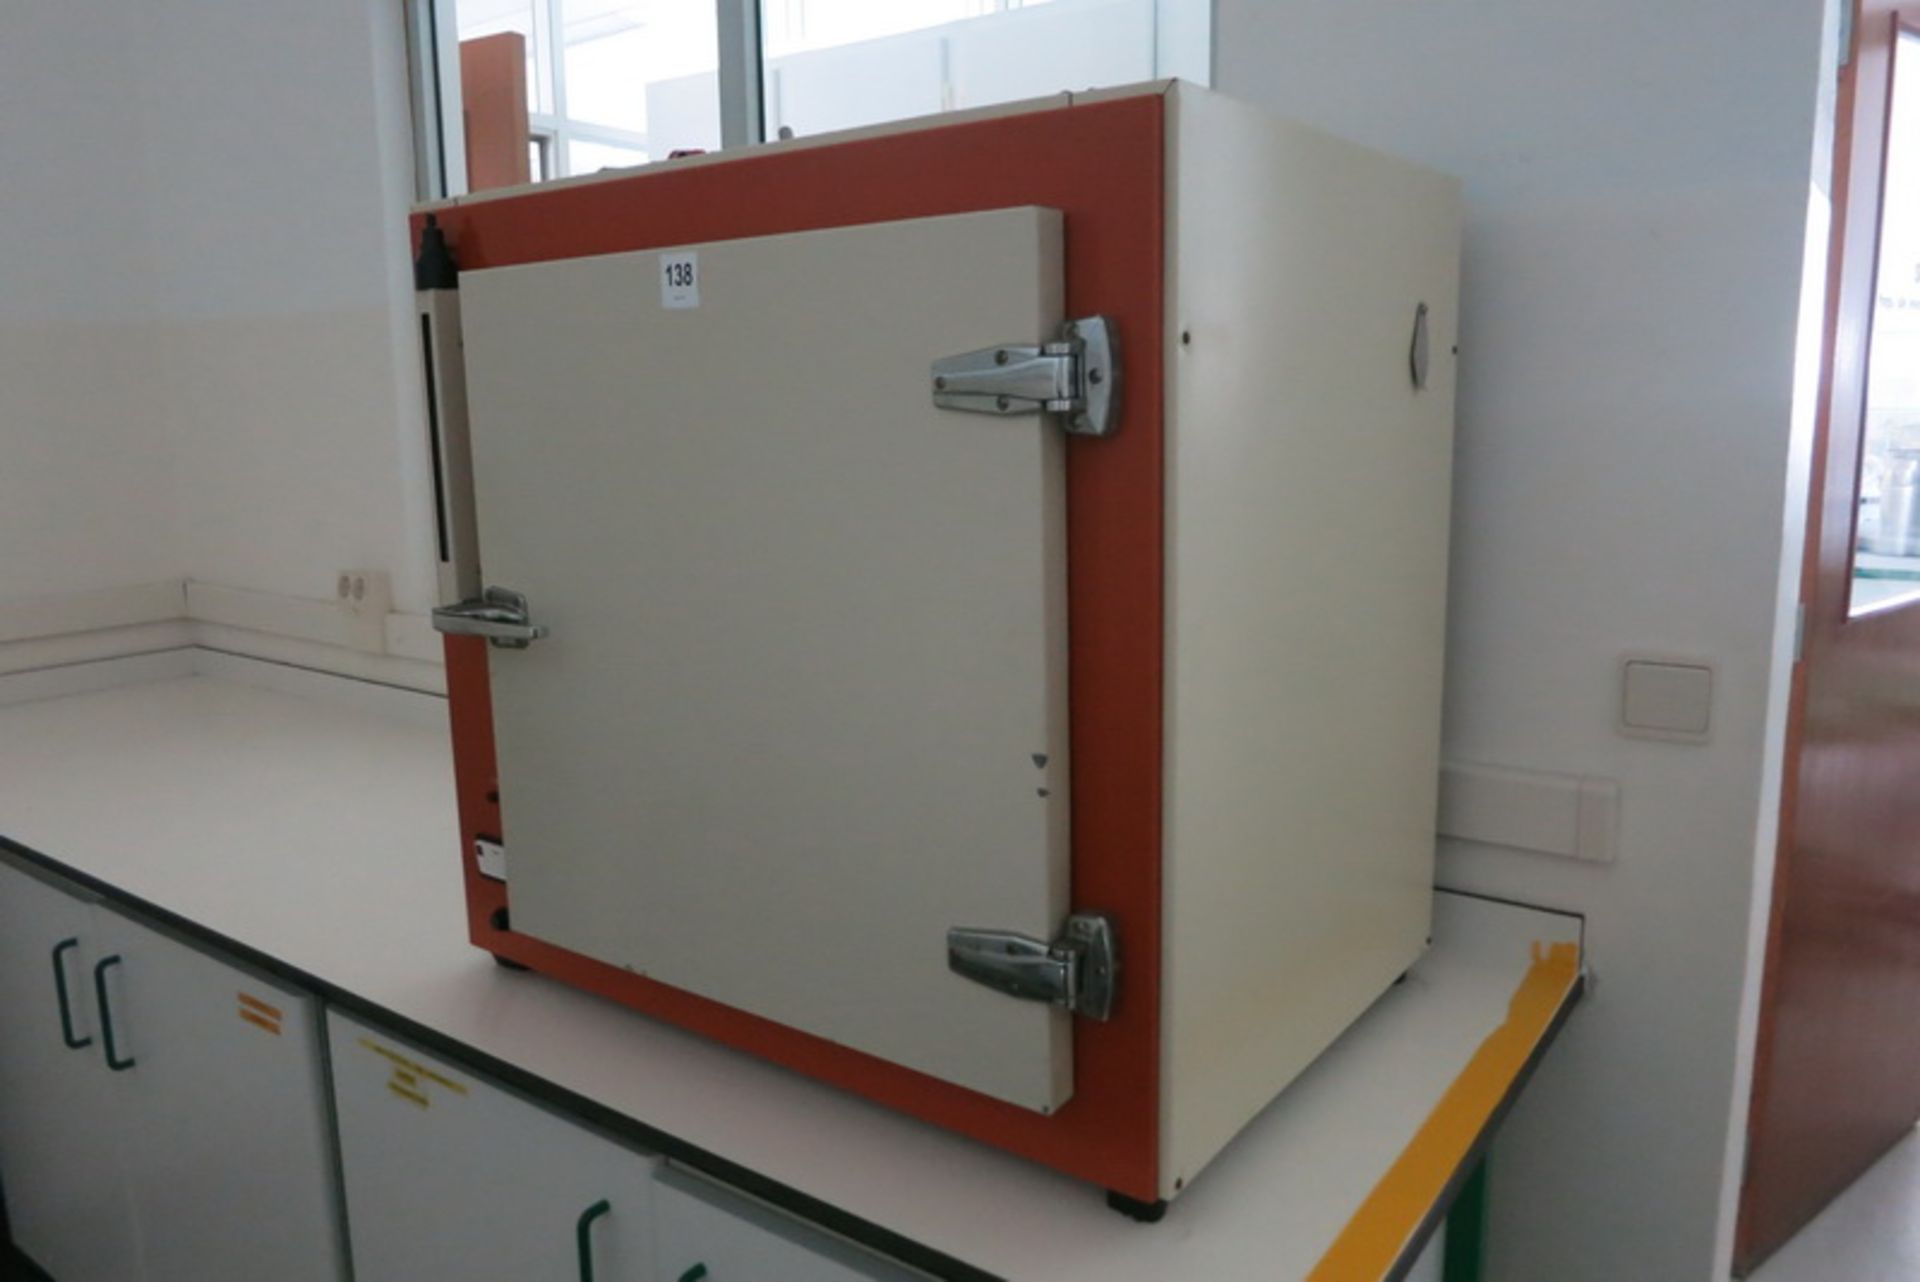 Cassel laboratory oven, model ES-5, s/n 8925